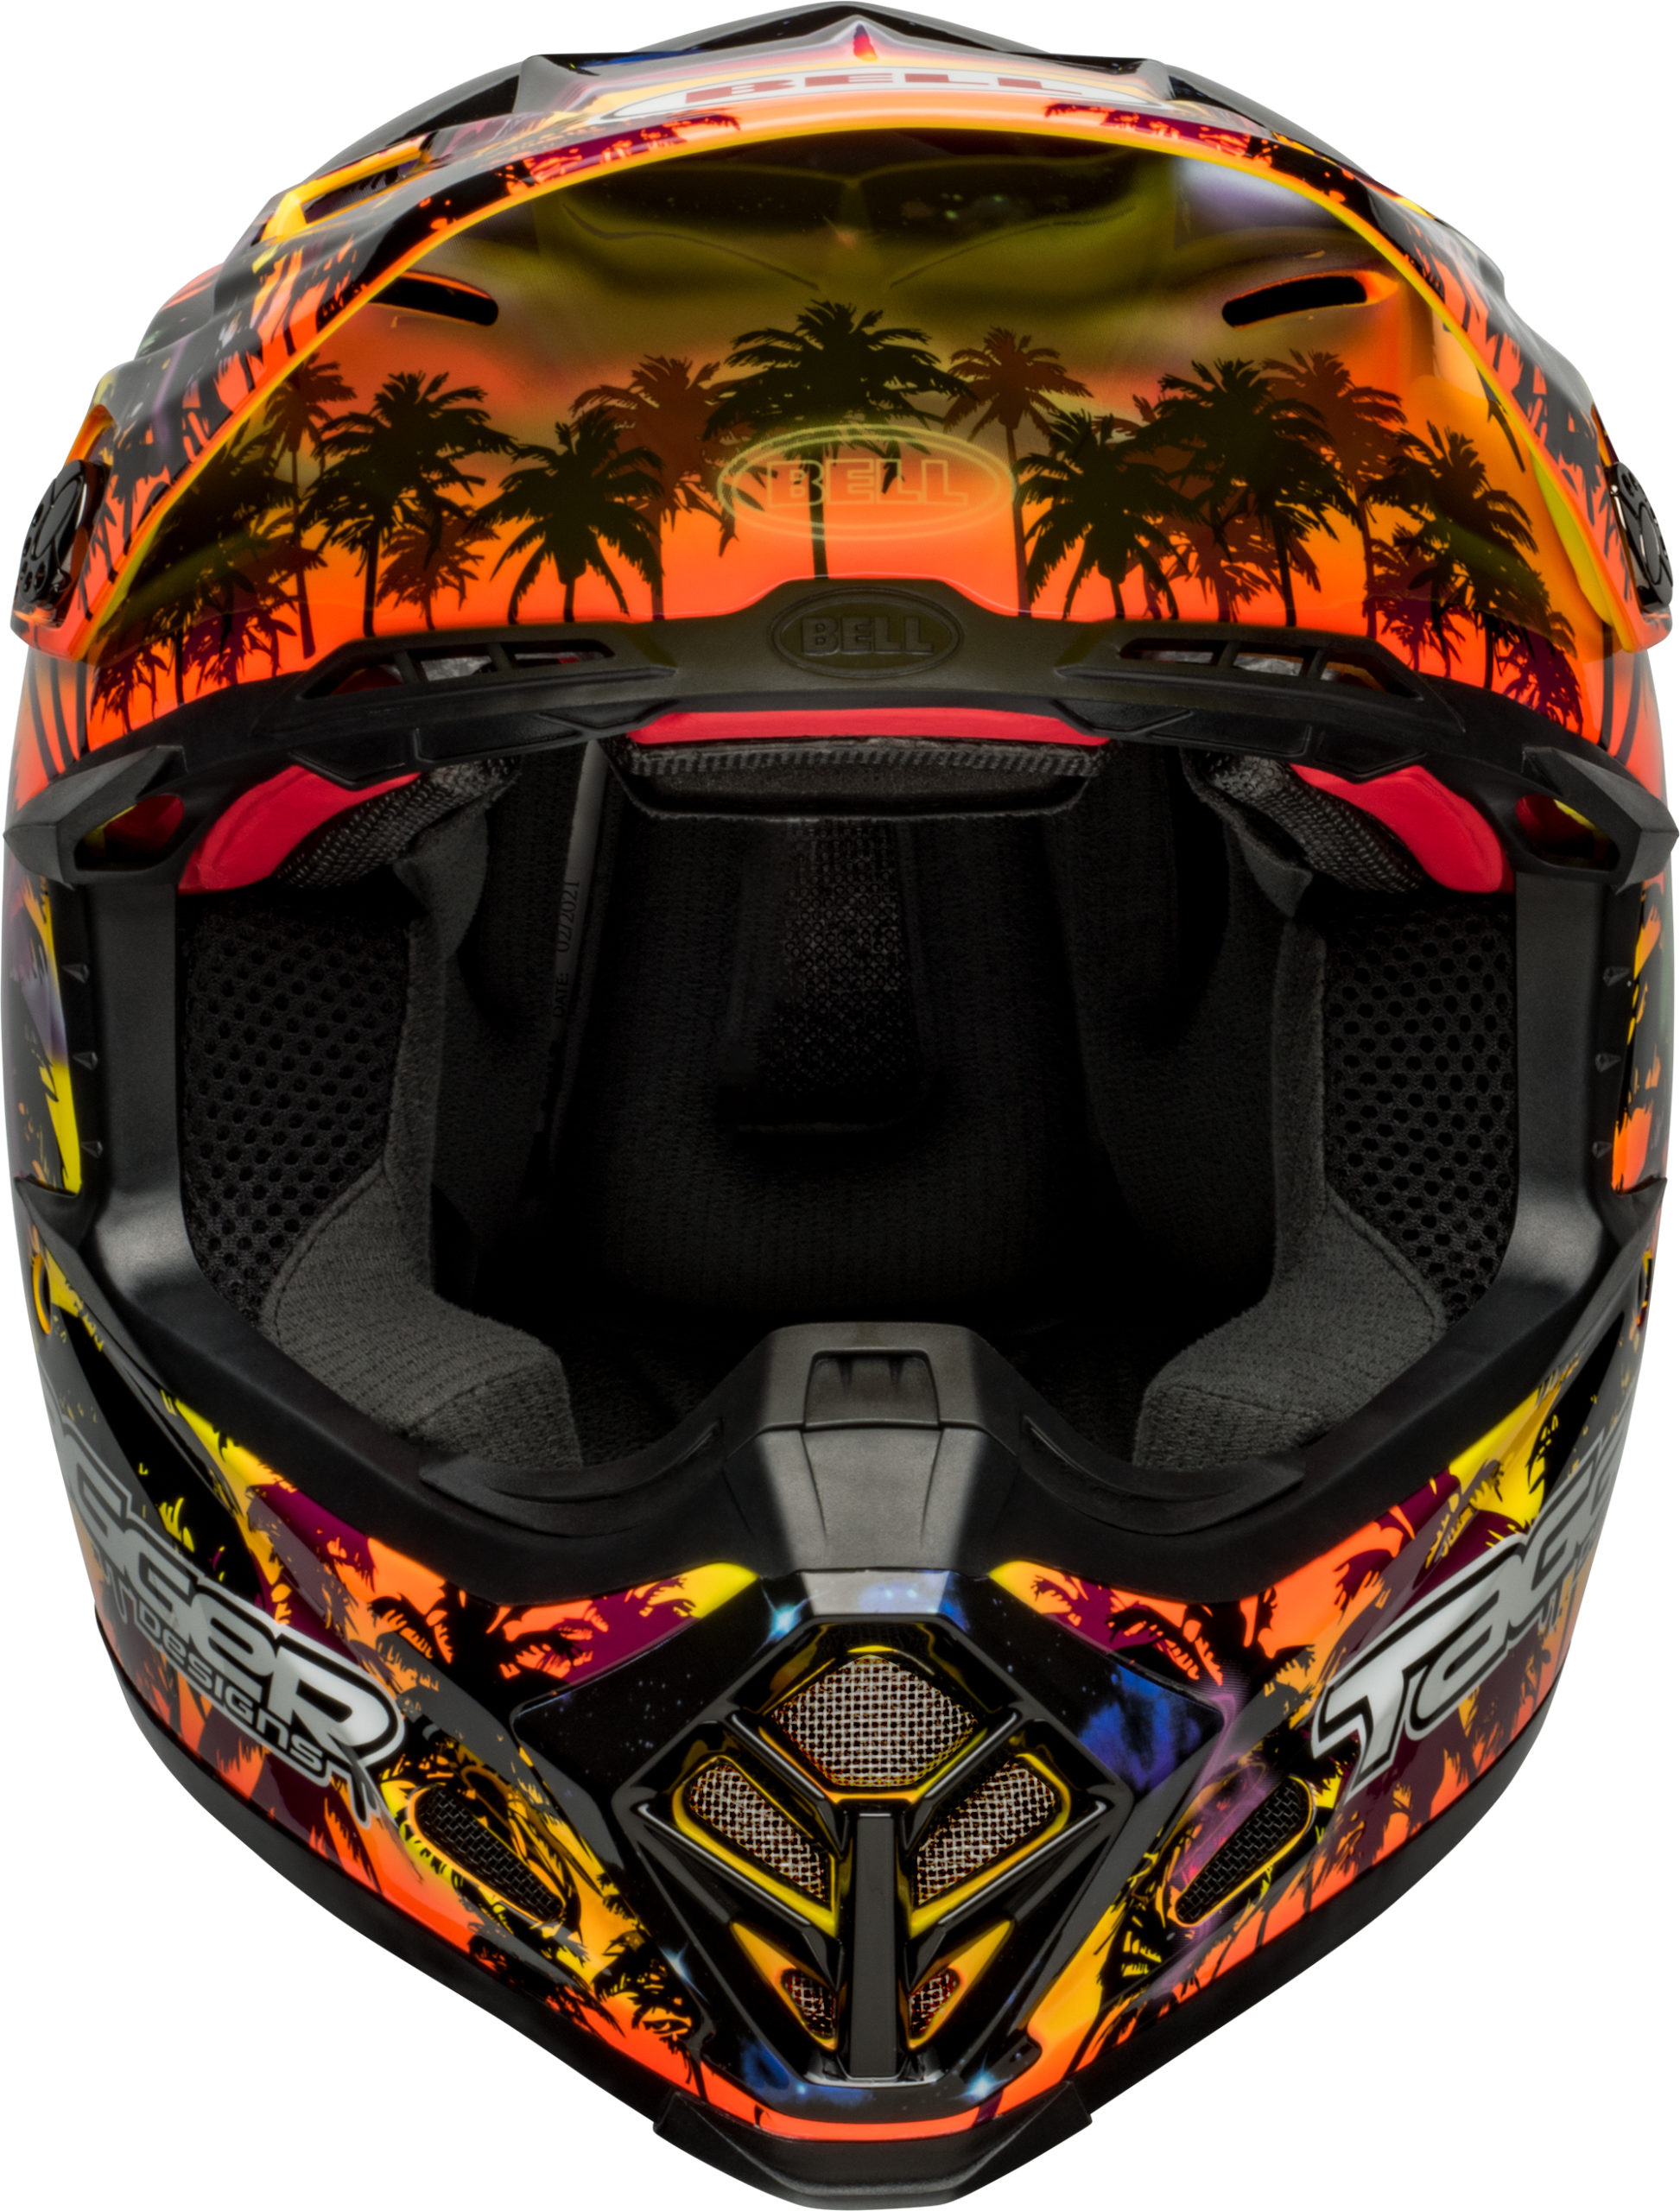 Product Spotlight: Bell Moto-9s Flex (Tropical Fever) Helmet